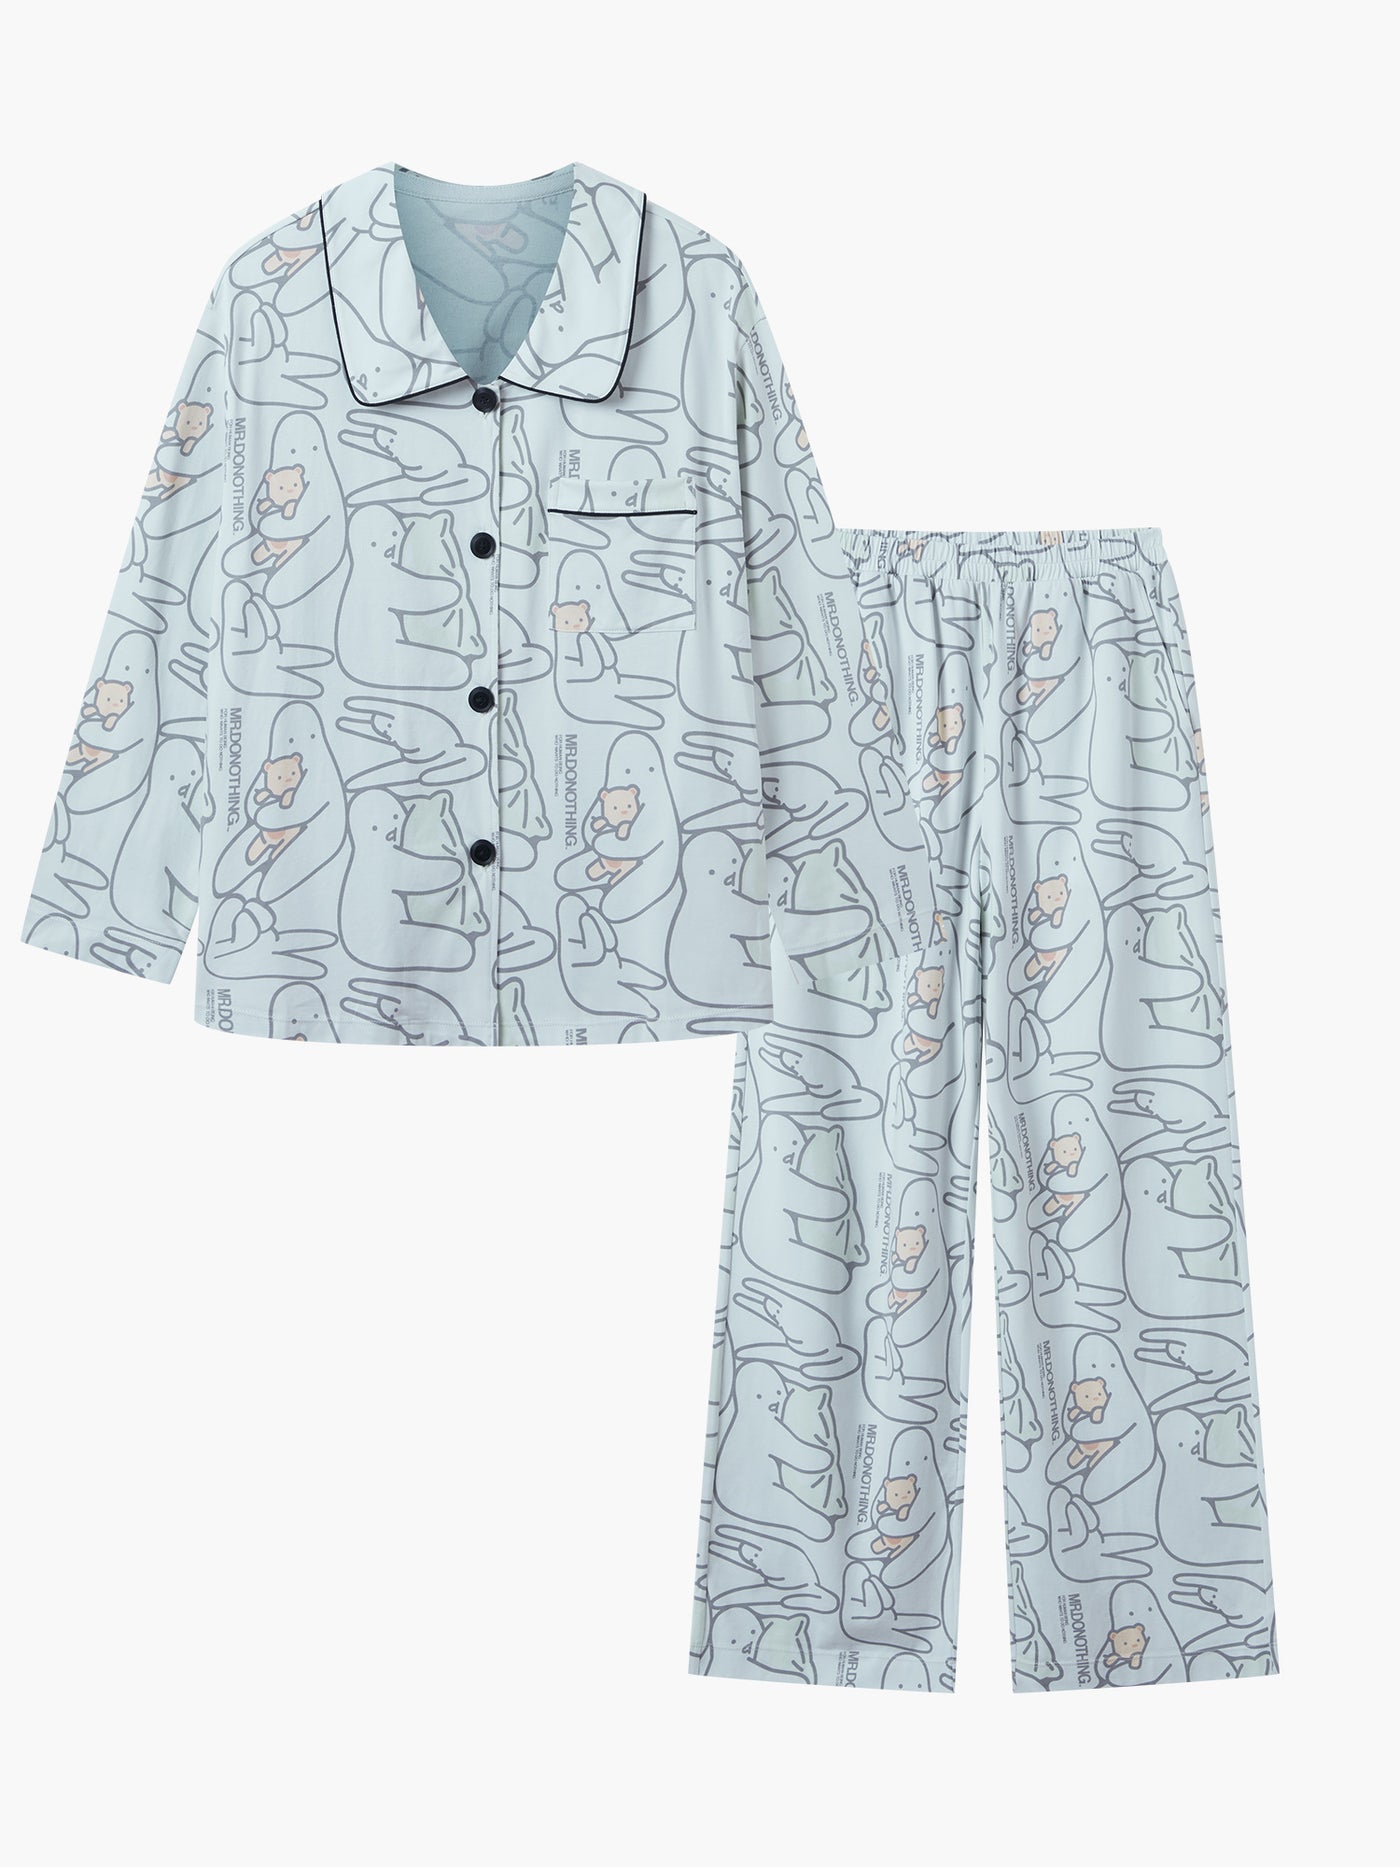 ubras x Mr. Donothing Lazy Long Sleeved Pajamas Suit